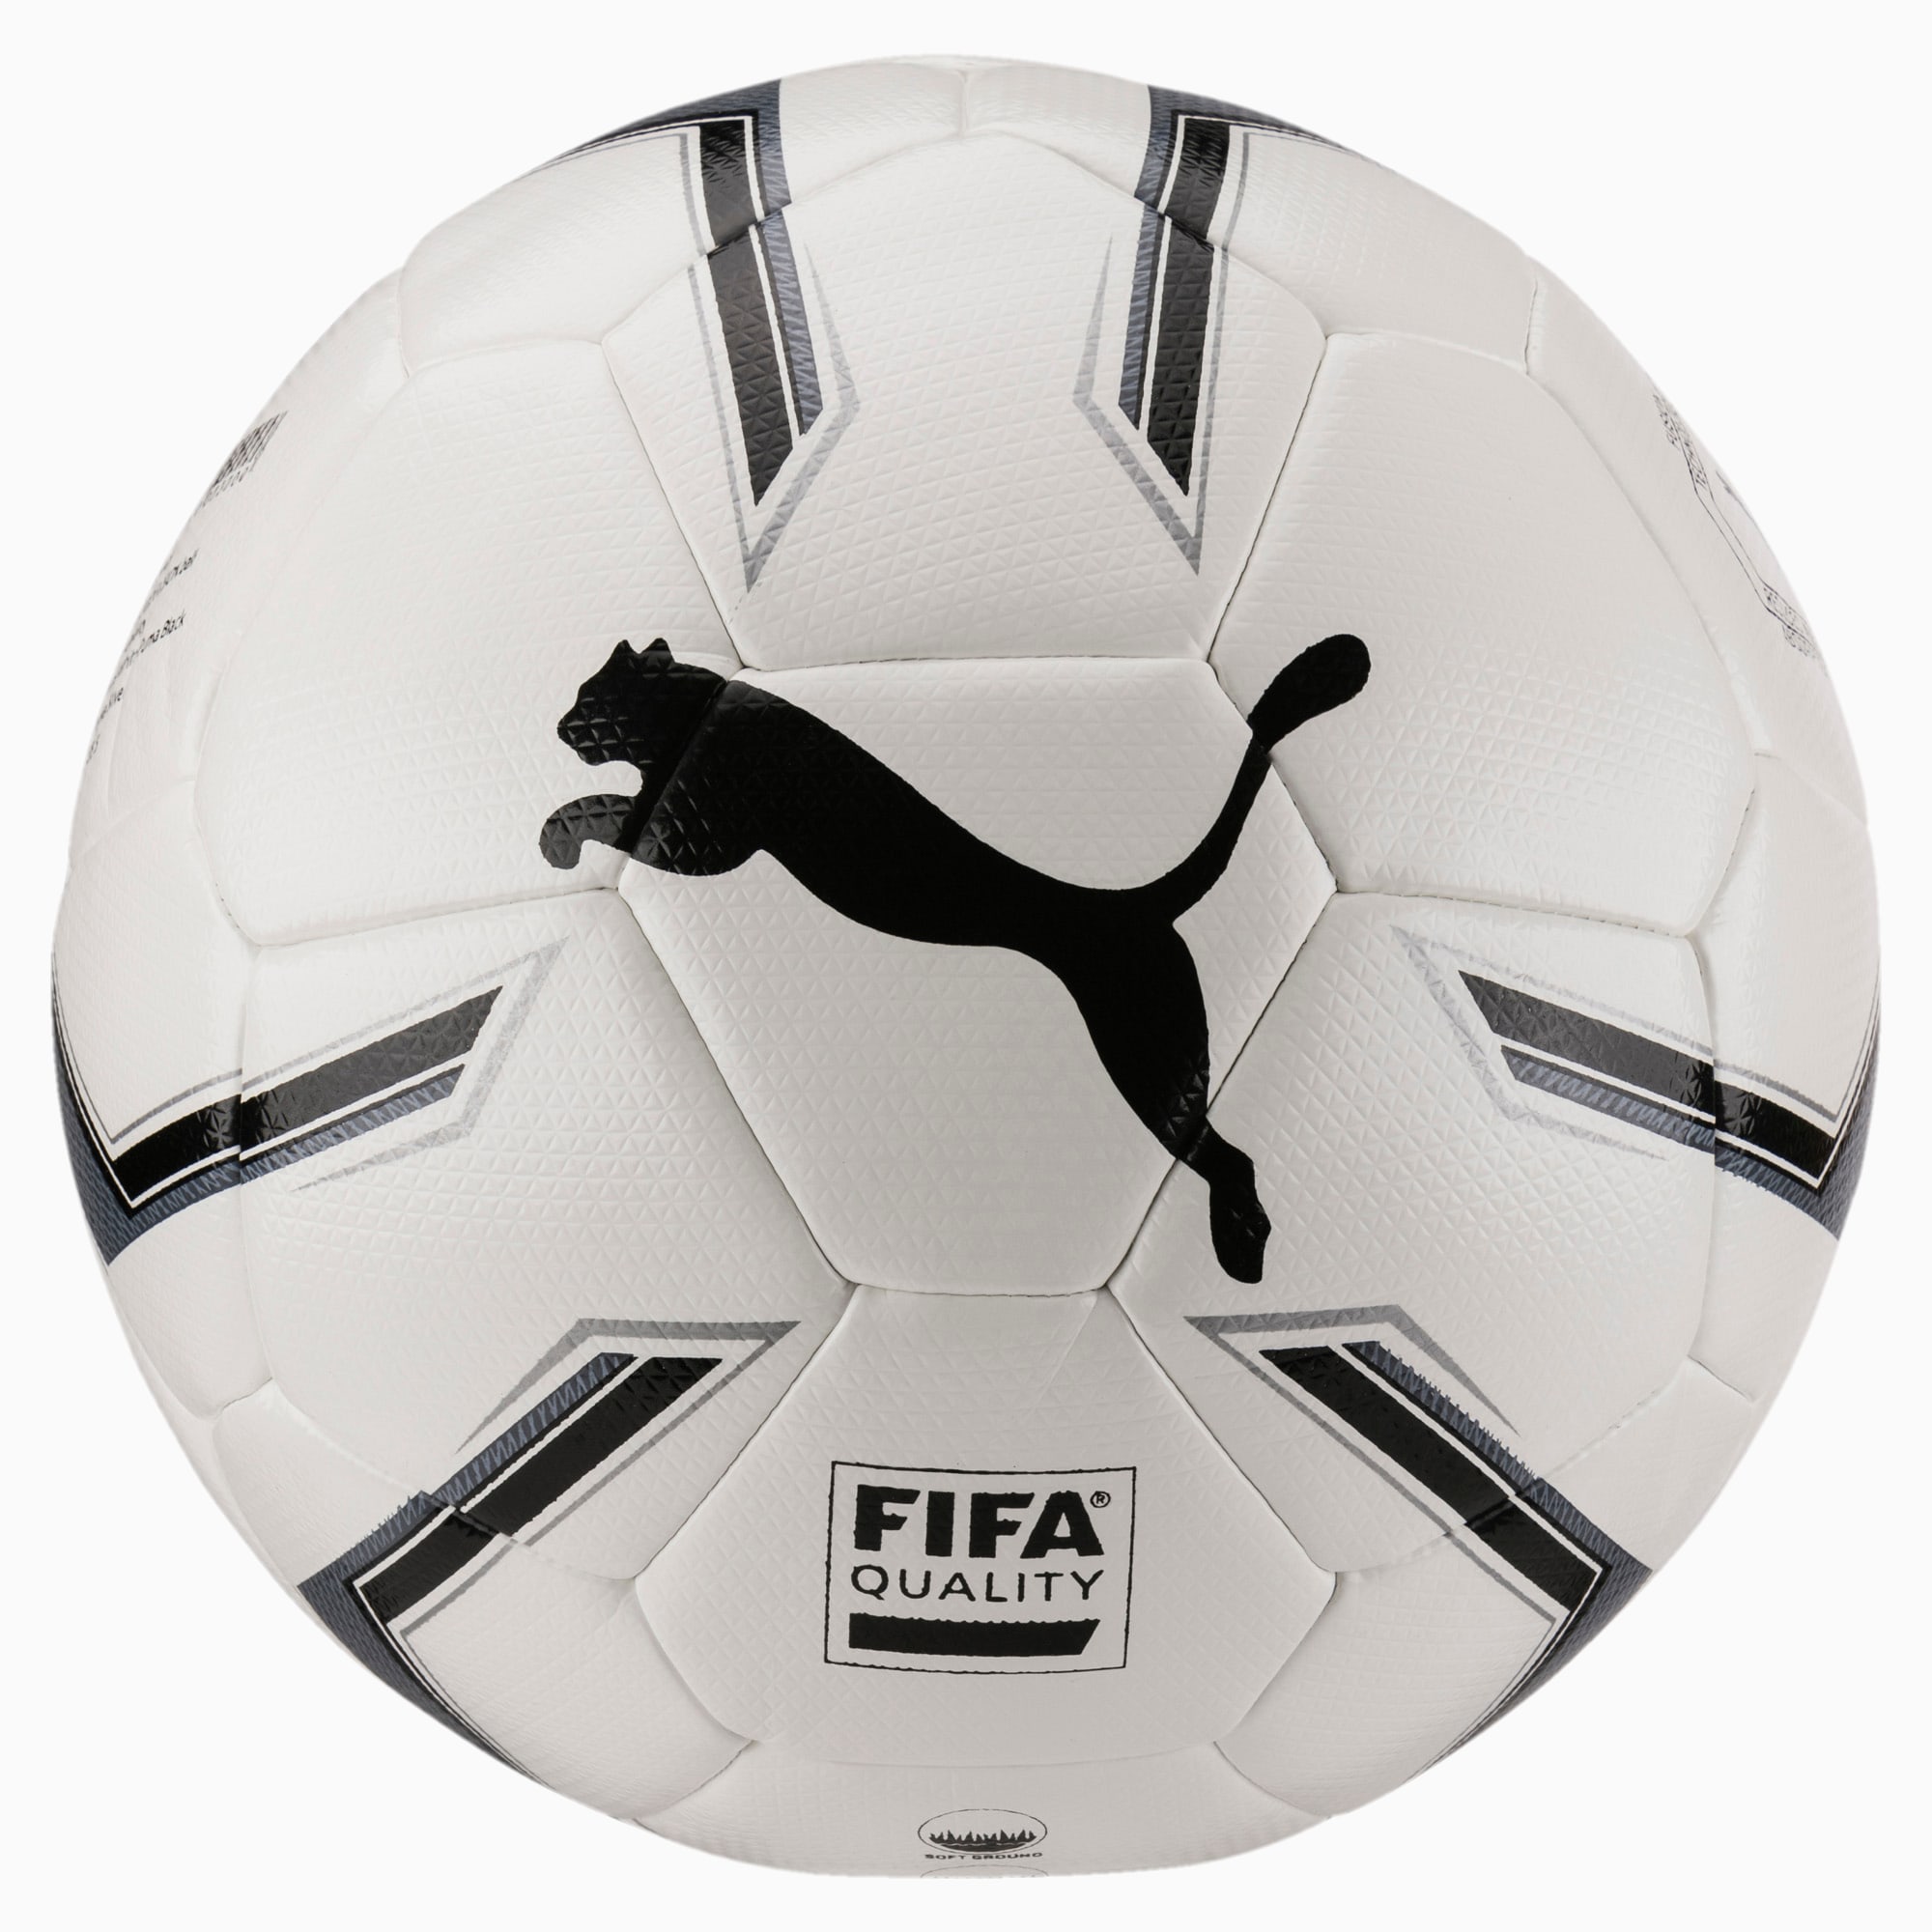 Puma公式 プーマエリート 2 2 ハイブリット Fifa Quality ボール J